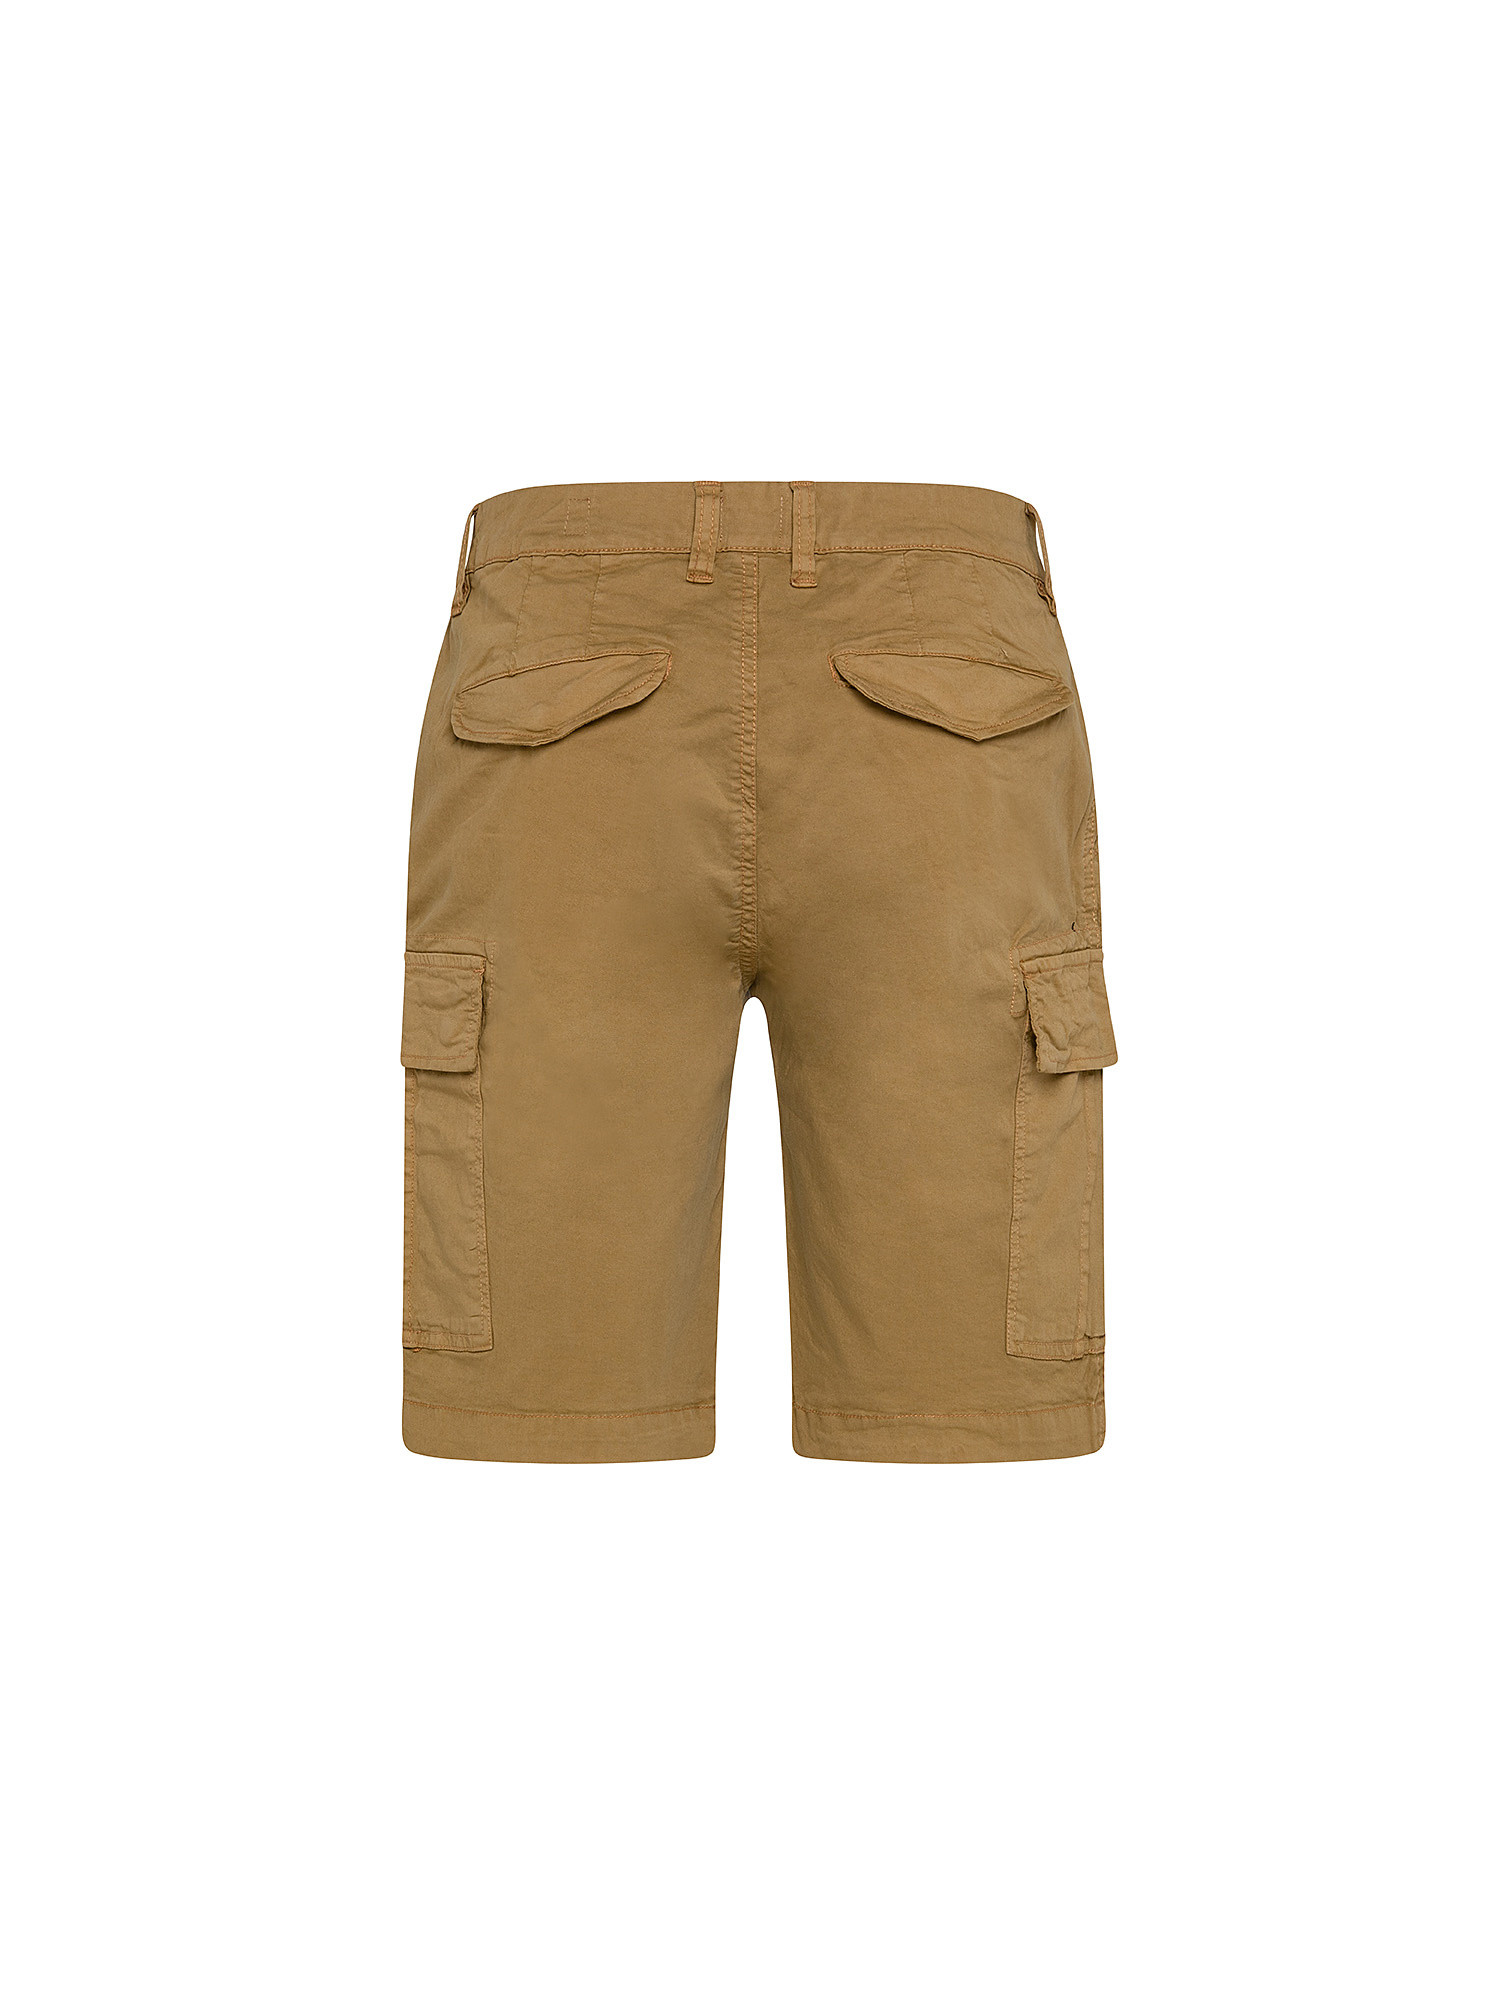 Stretch cotton cargo bermuda shorts, Beige, large image number 1